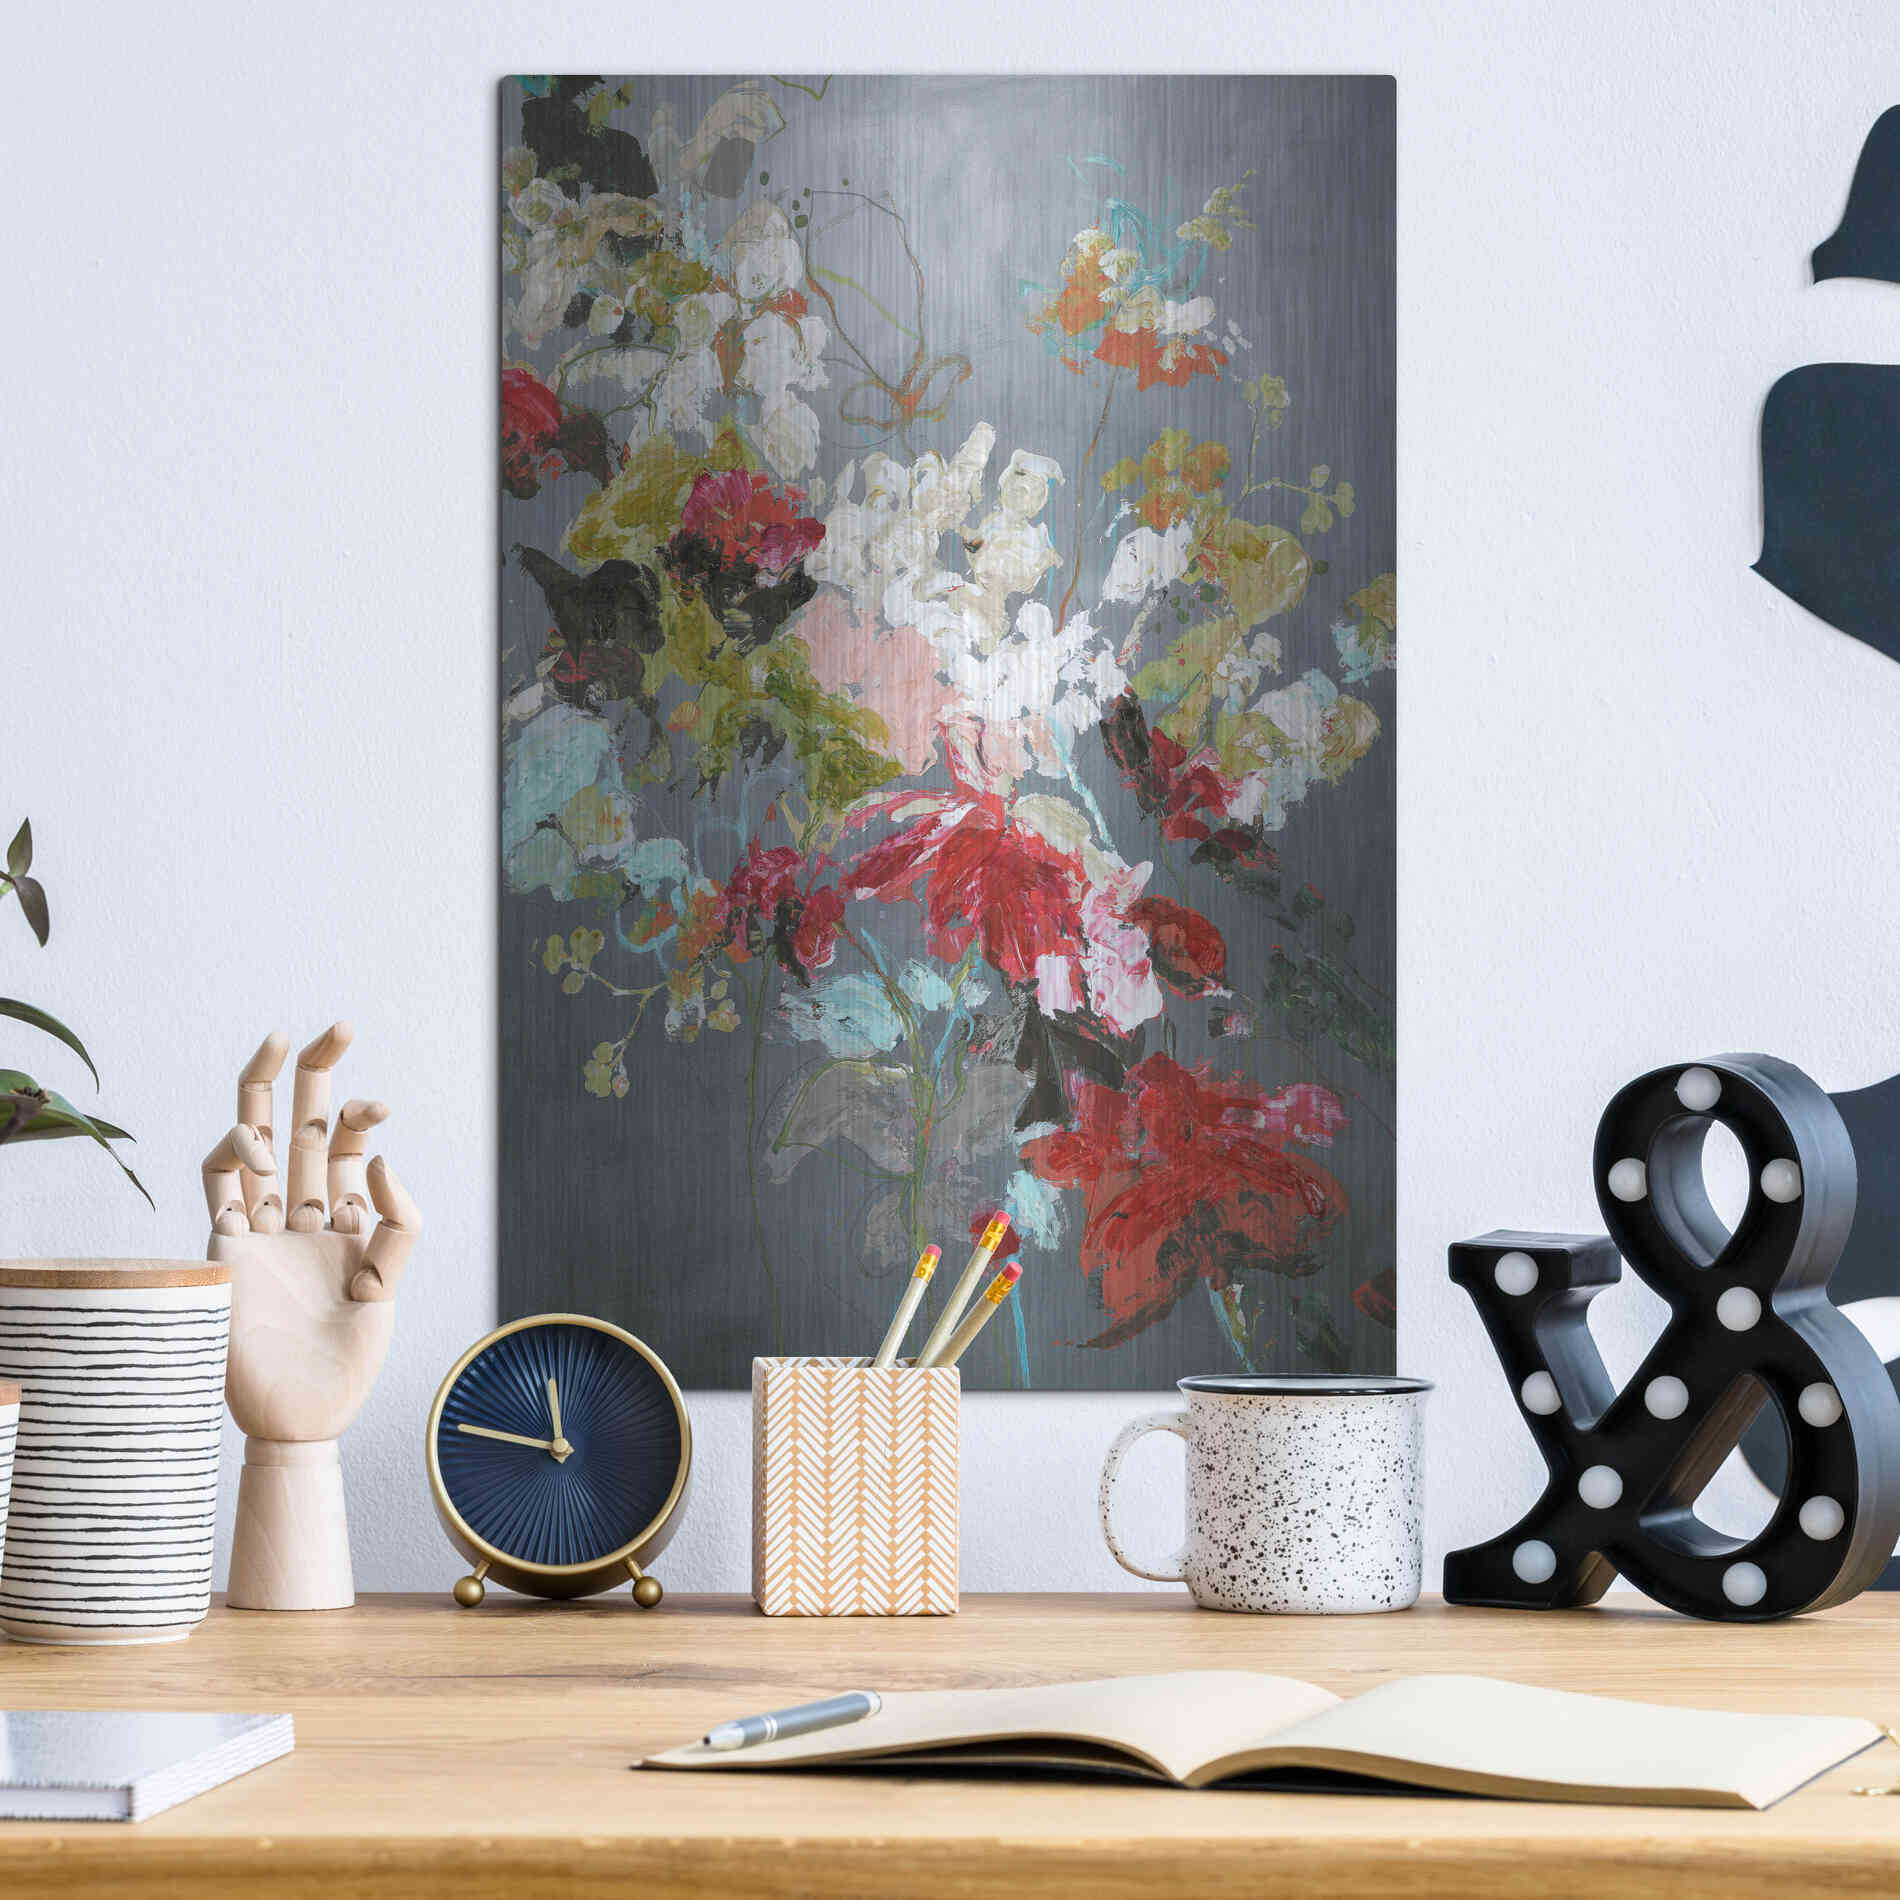 Luxe Metal Art 'Abstract Floral 2' by Design Fabrikken, Metal Wall Art,12x16